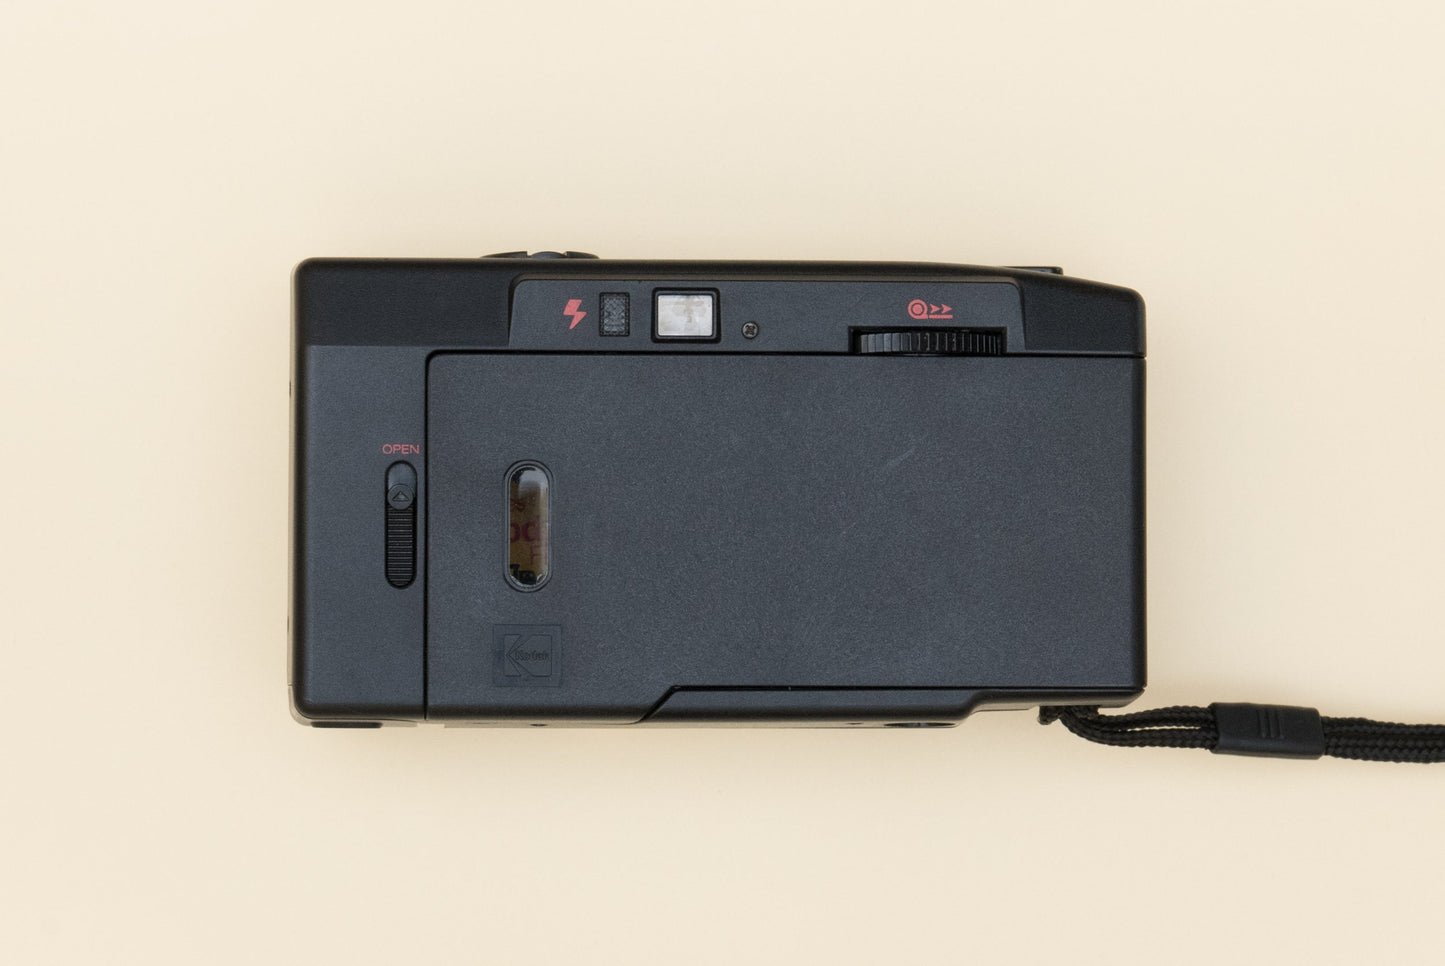 Kodak 335 Compact 35mm Point and Shoot Film Camera